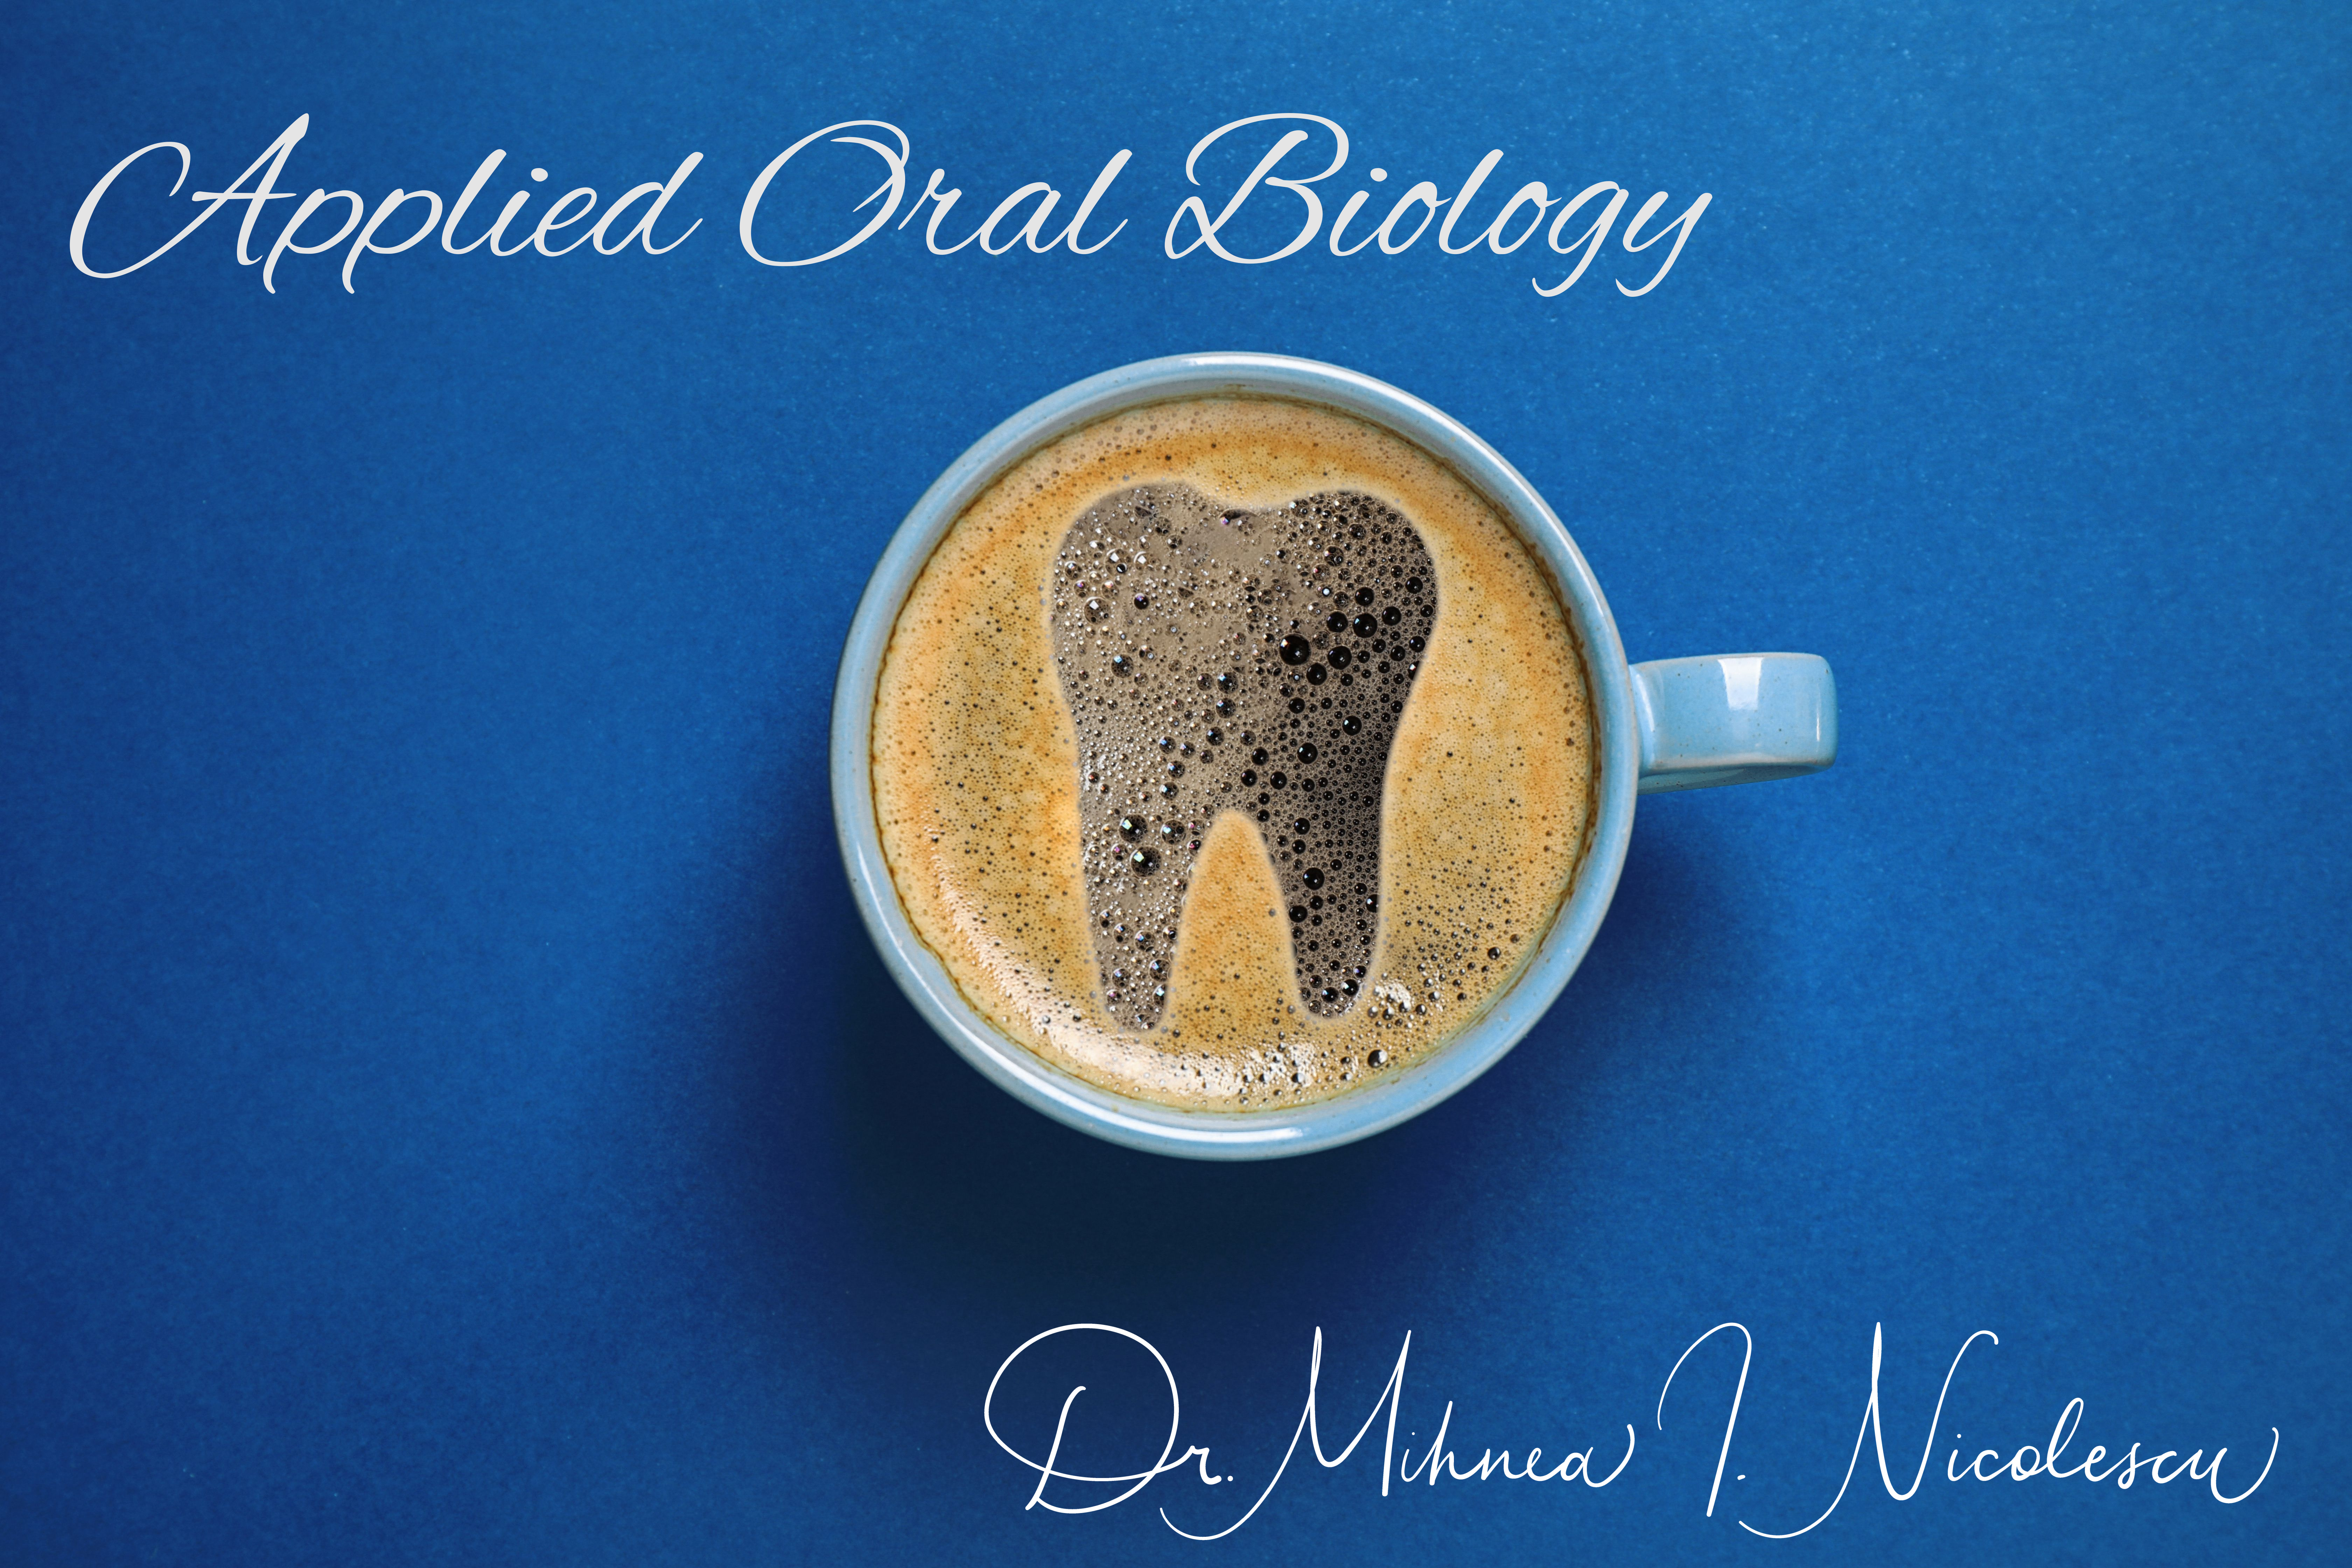 Applied Oral Biology